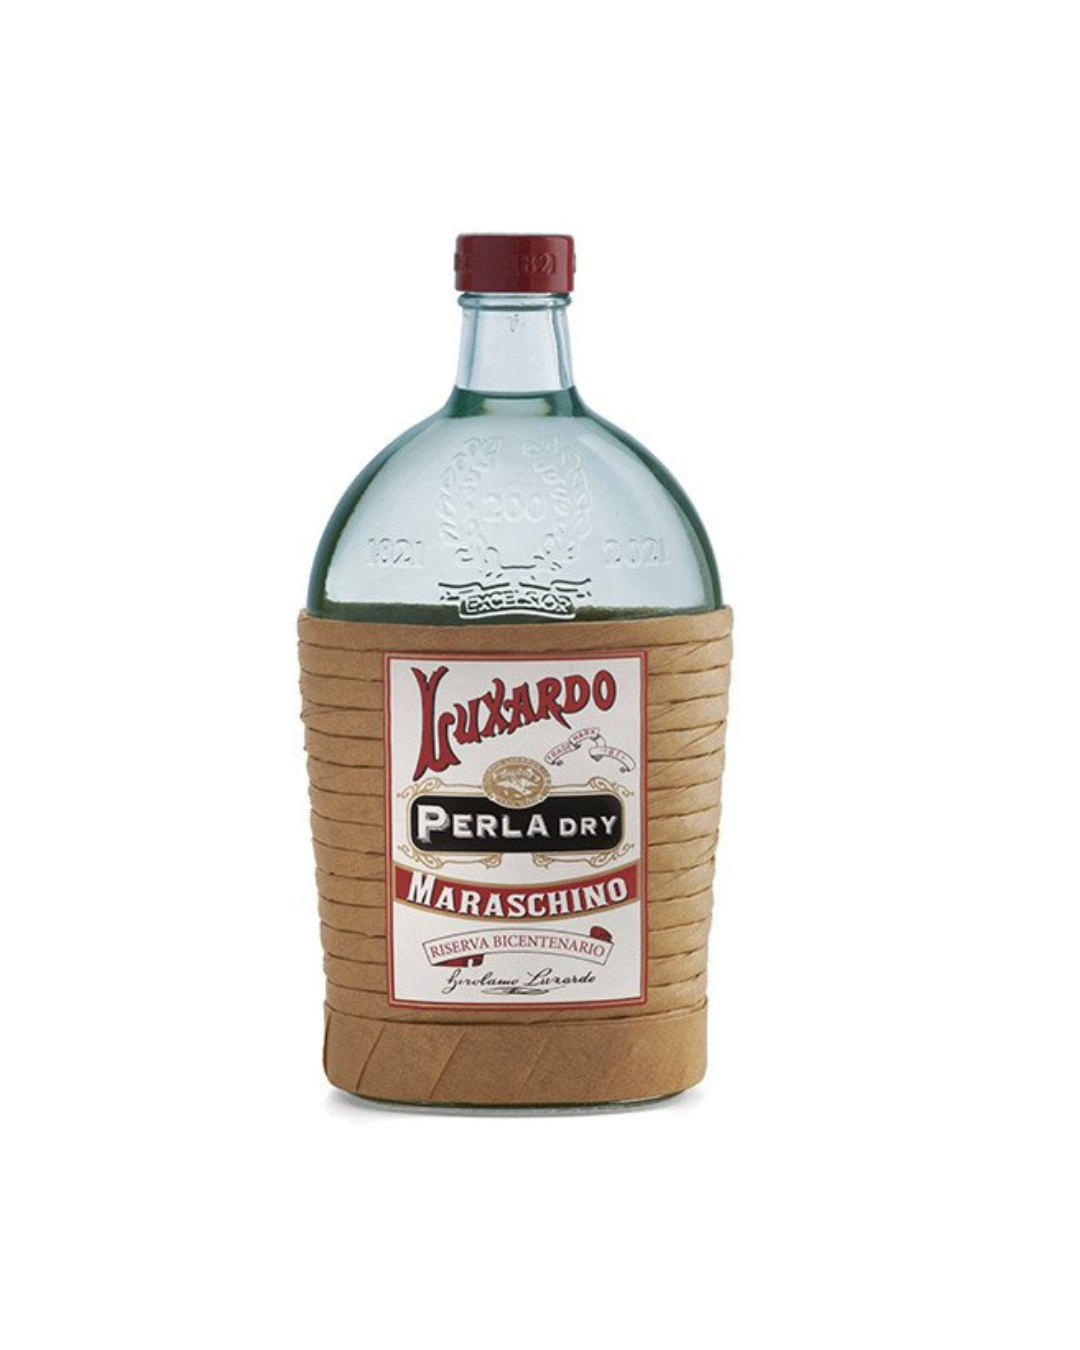 Maraschino Perla Dry 40%Vol - Luxardo